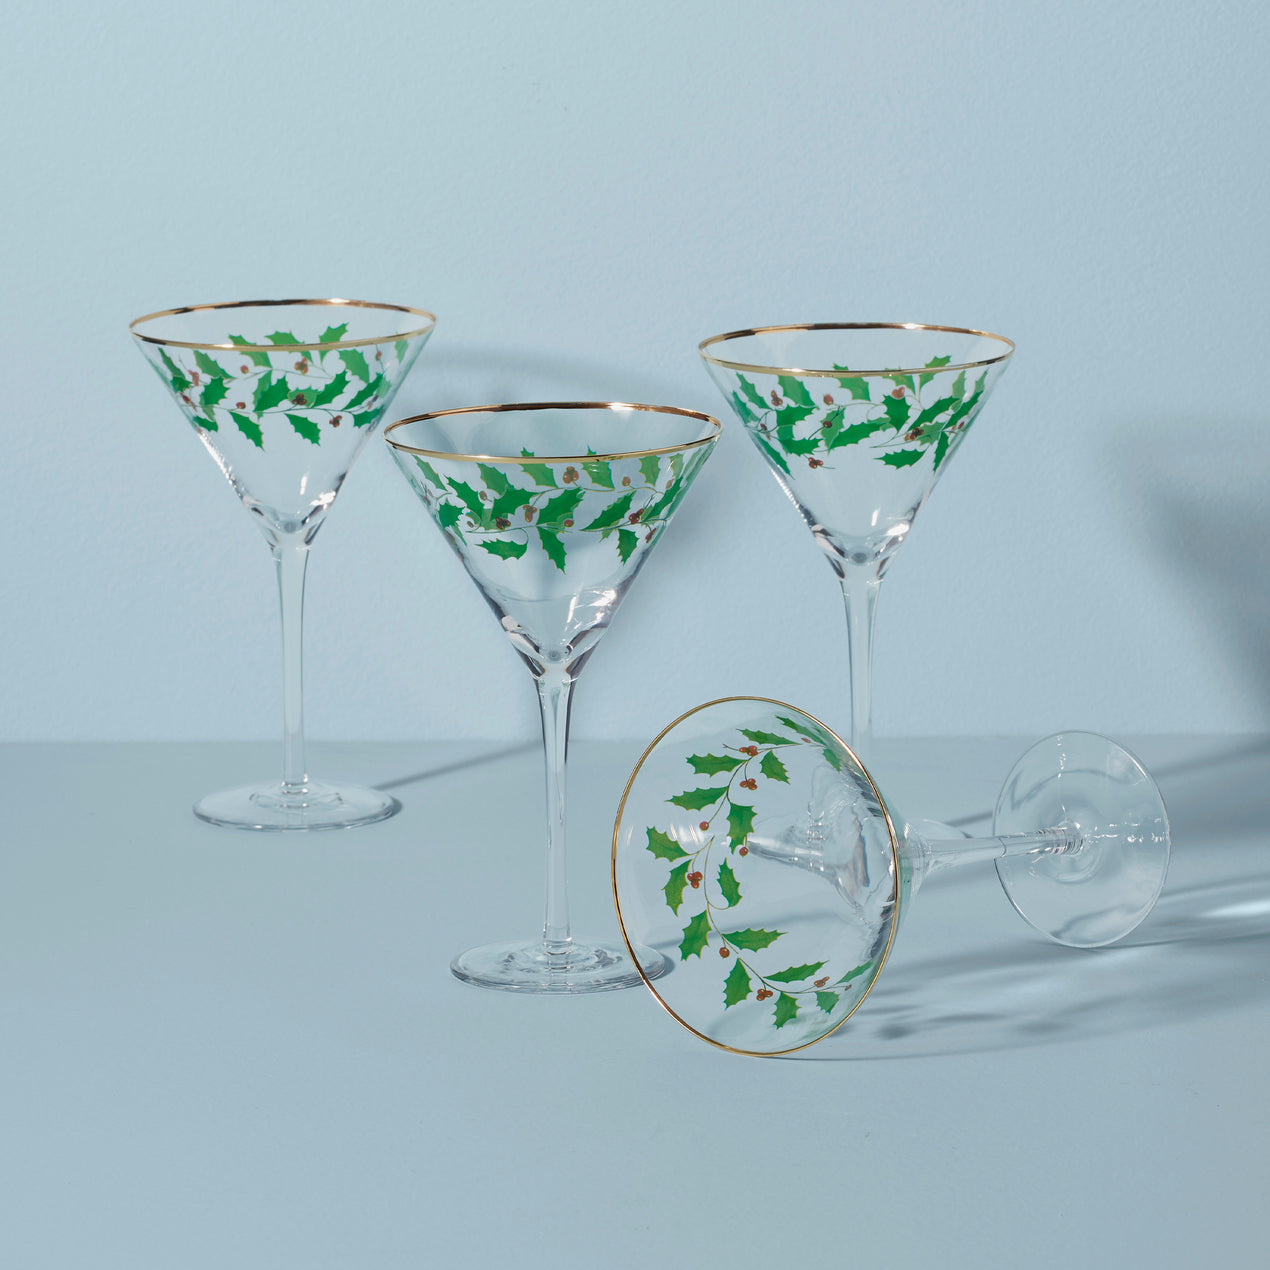 Up Stemware - Martini (Set of Two Glasses)